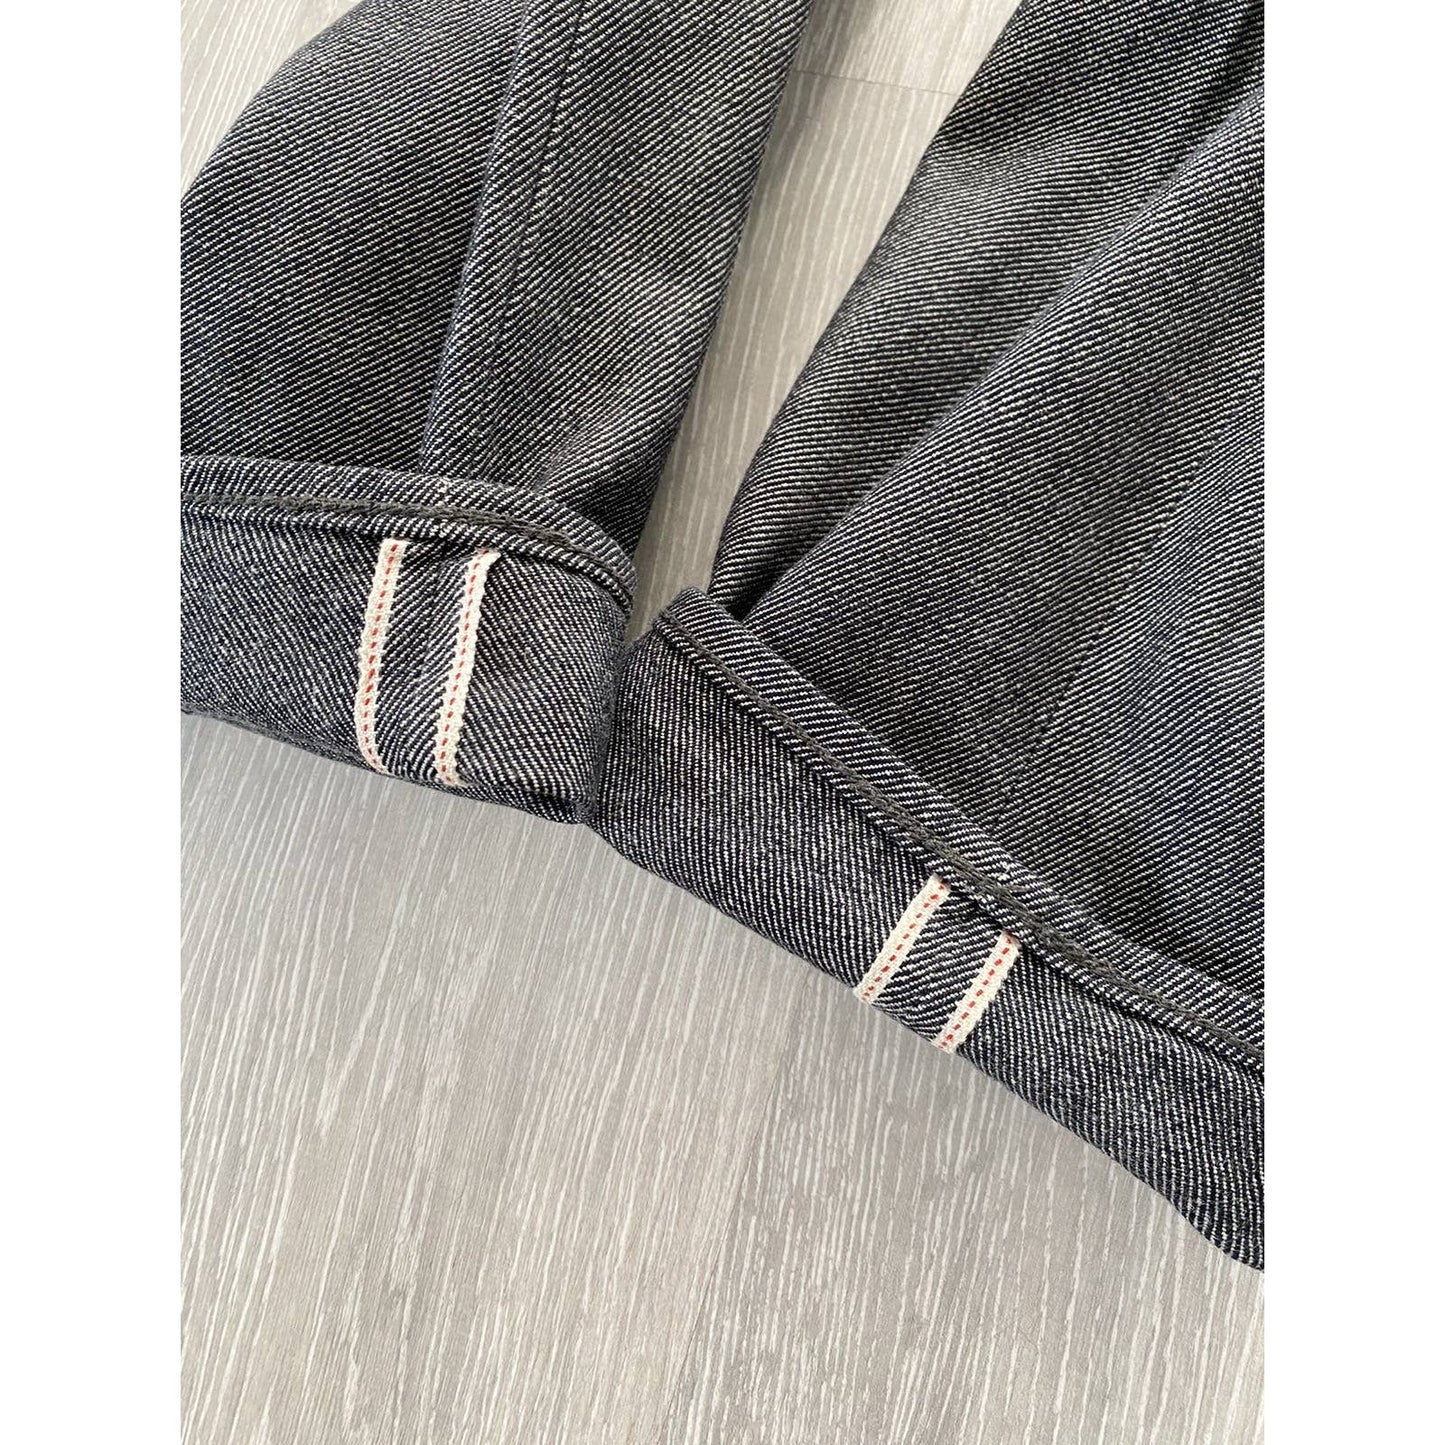 Evisu jeans vintage selvedge grey black seagulls Japan PMG